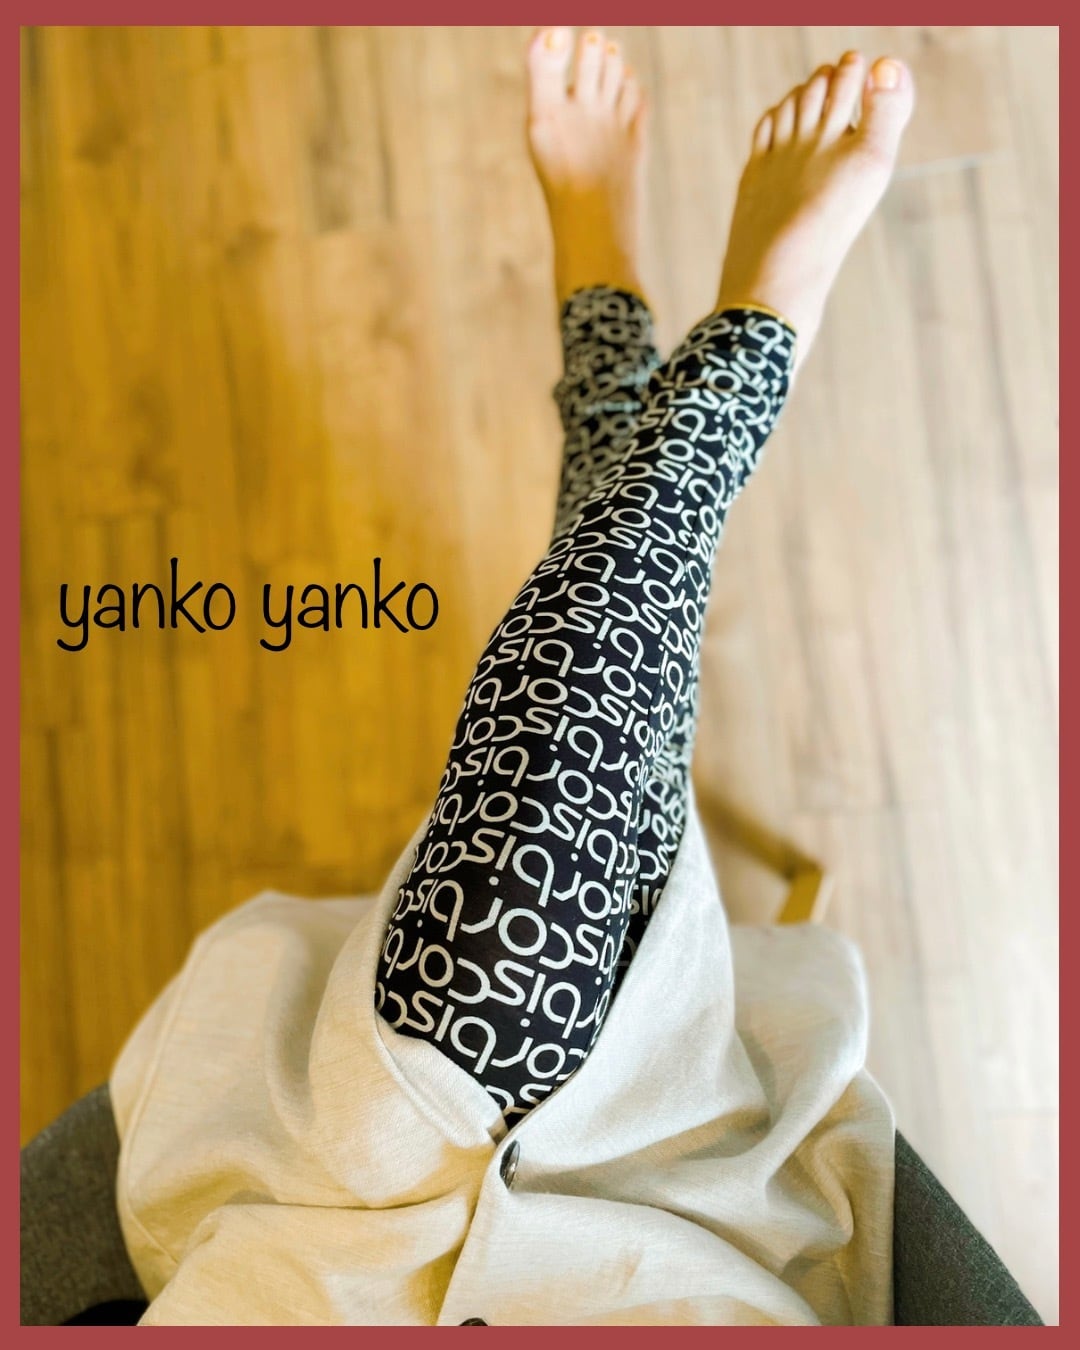 yanko yanko